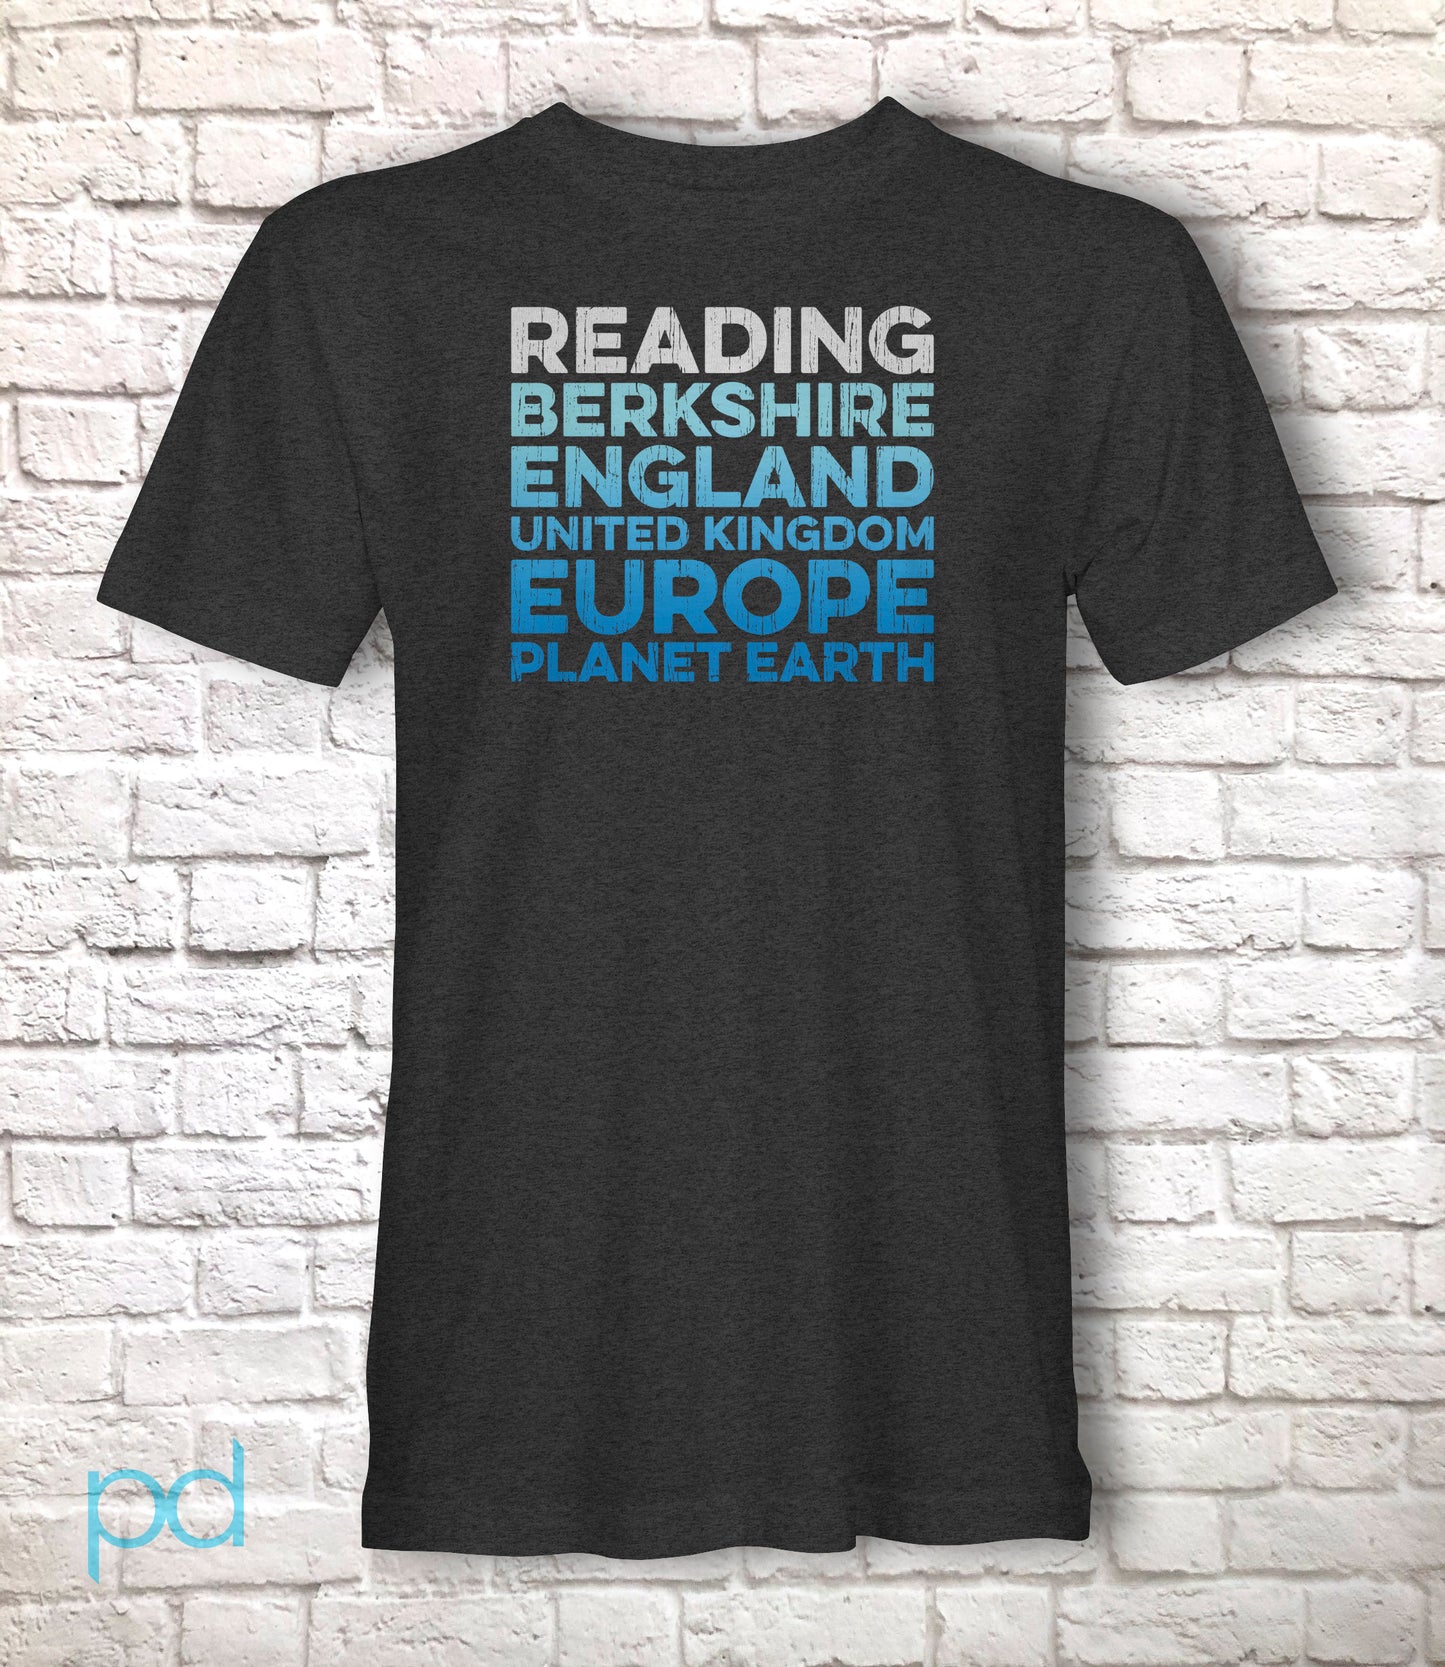 Reading Town T-Shirt, Berkshire Gift Idea, Readingite Tee Shirt Top